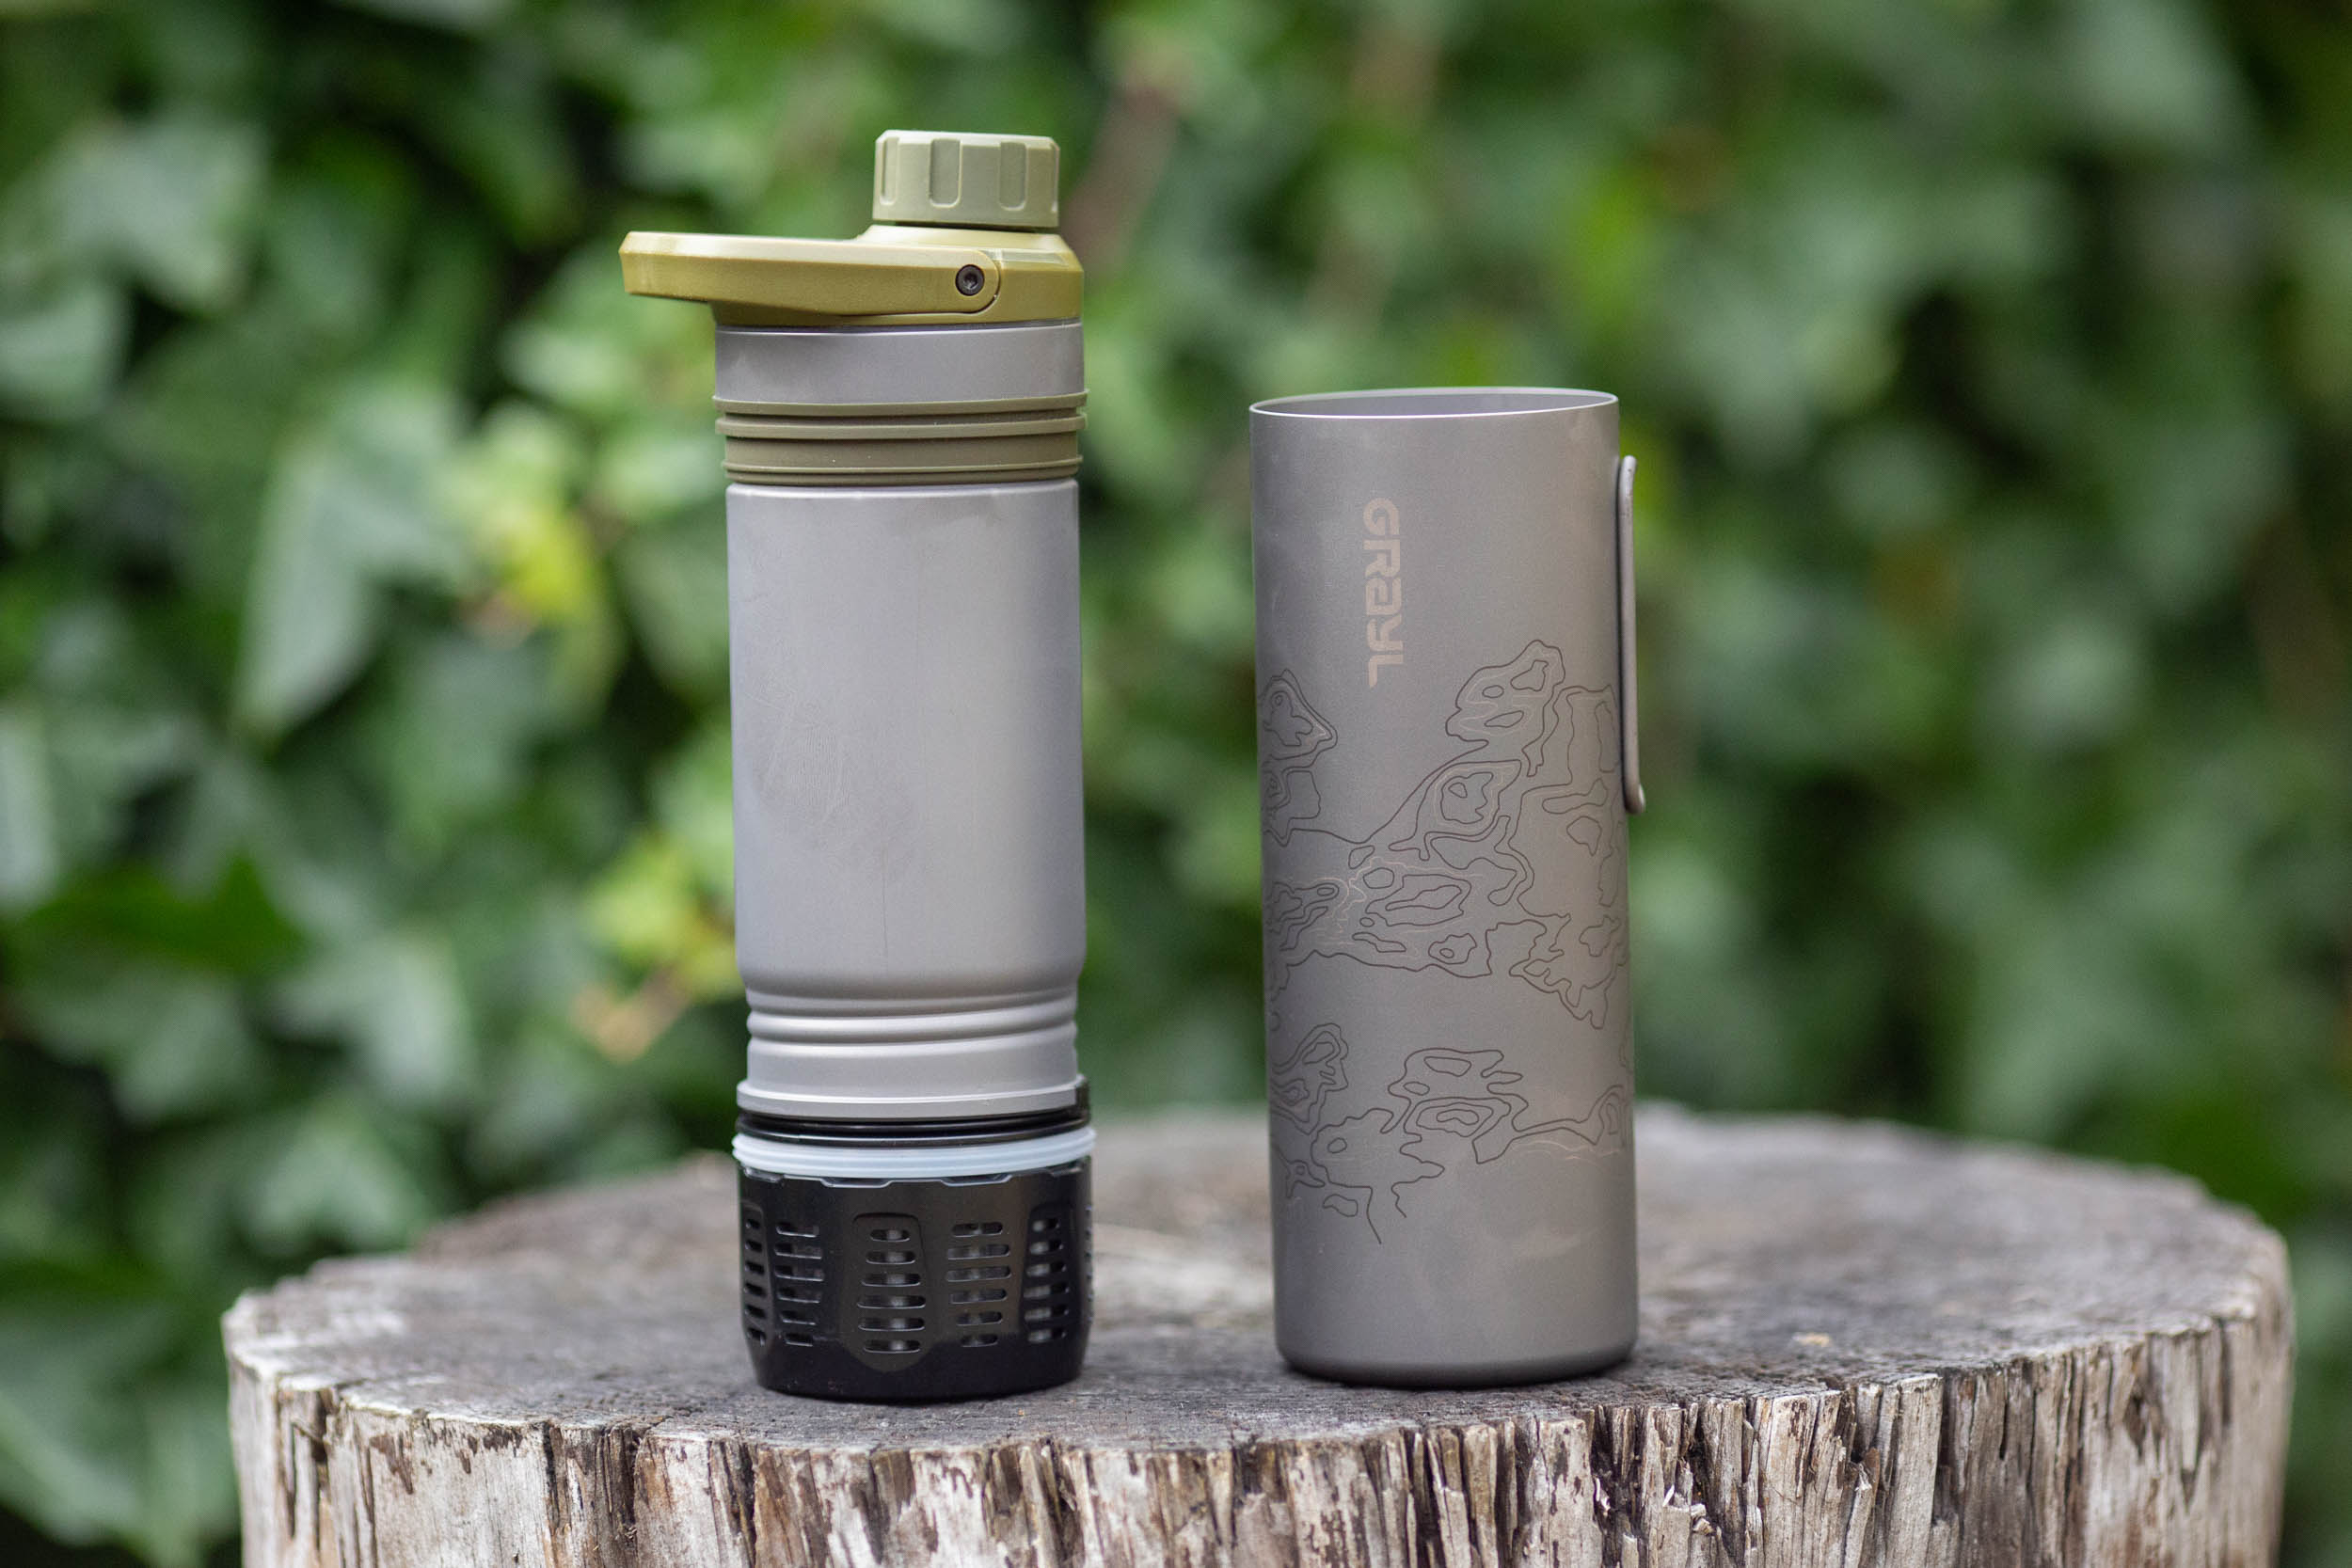 GRAYL UltraPress Ti is a Water Filter, Sports Bottle & Pot, All in One  Titanium Shell - Bikerumor